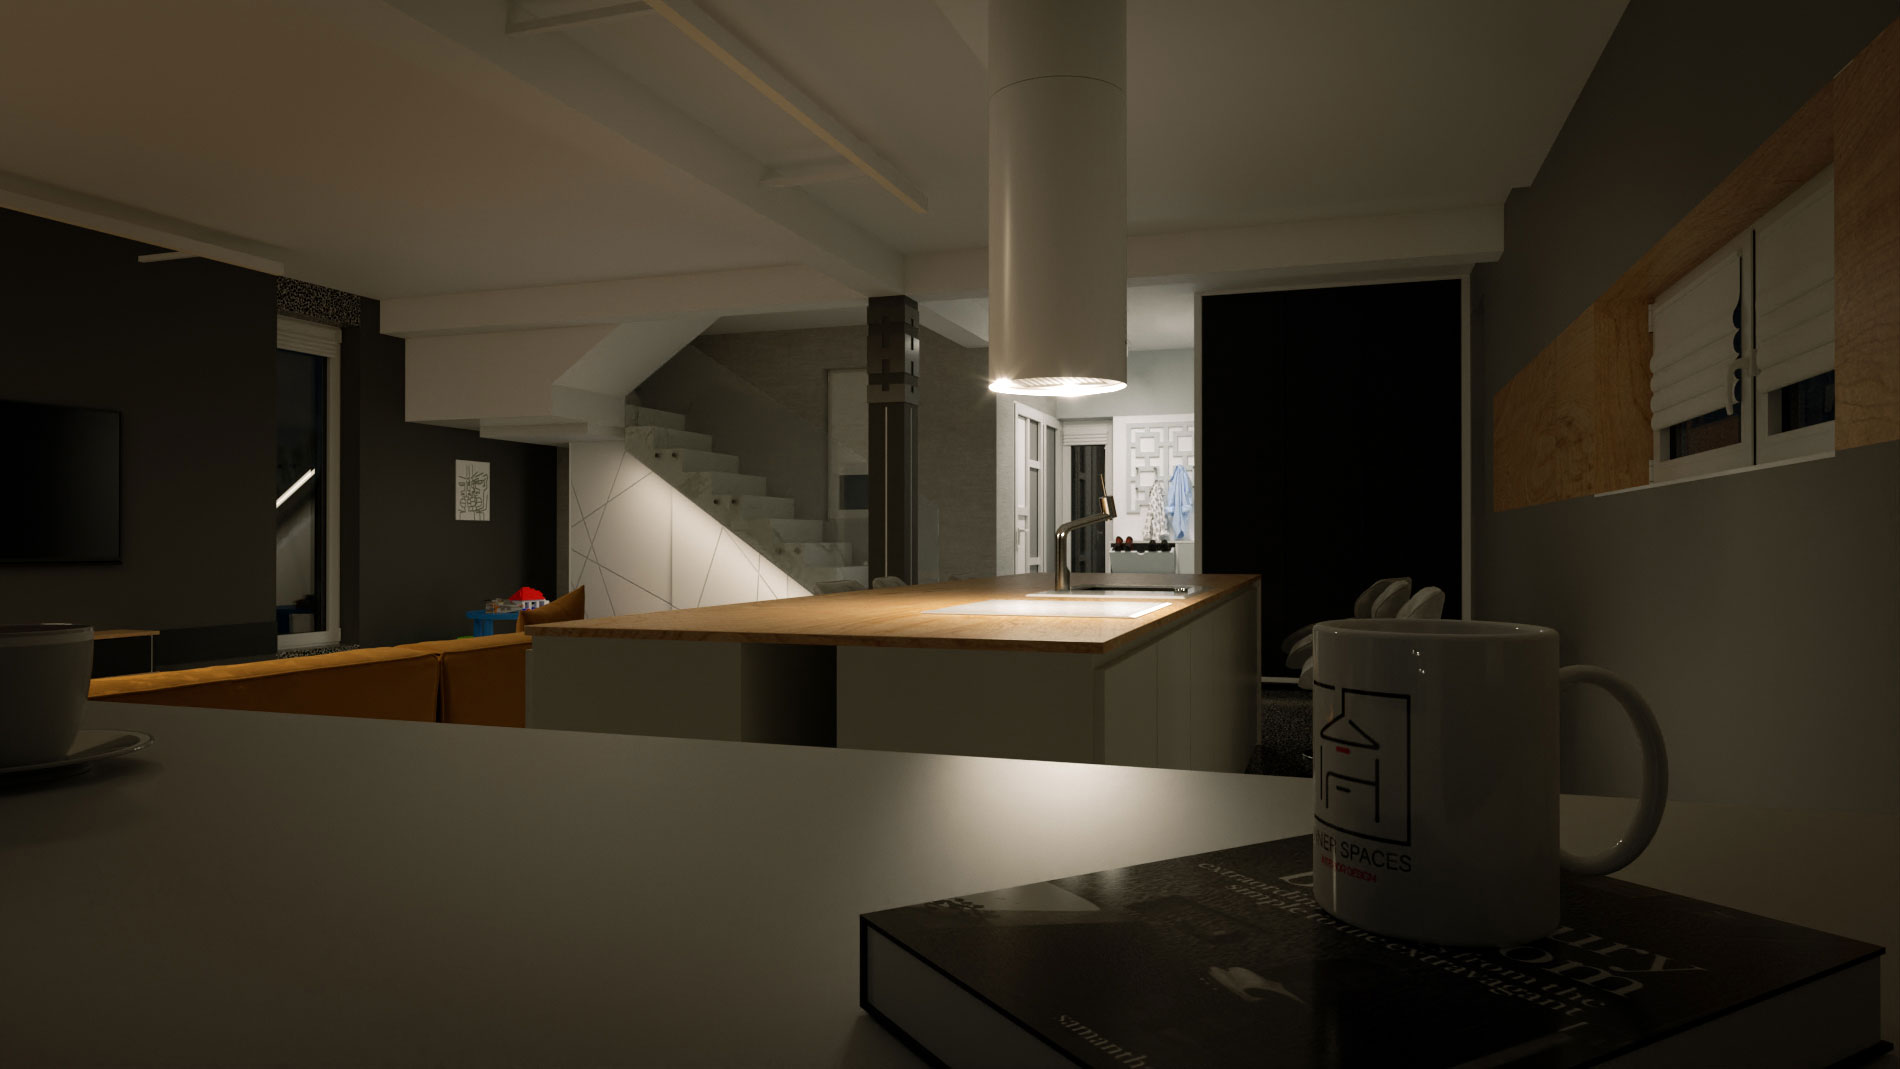 Living Room archviz - Sketchup rendering - Bitopia studio